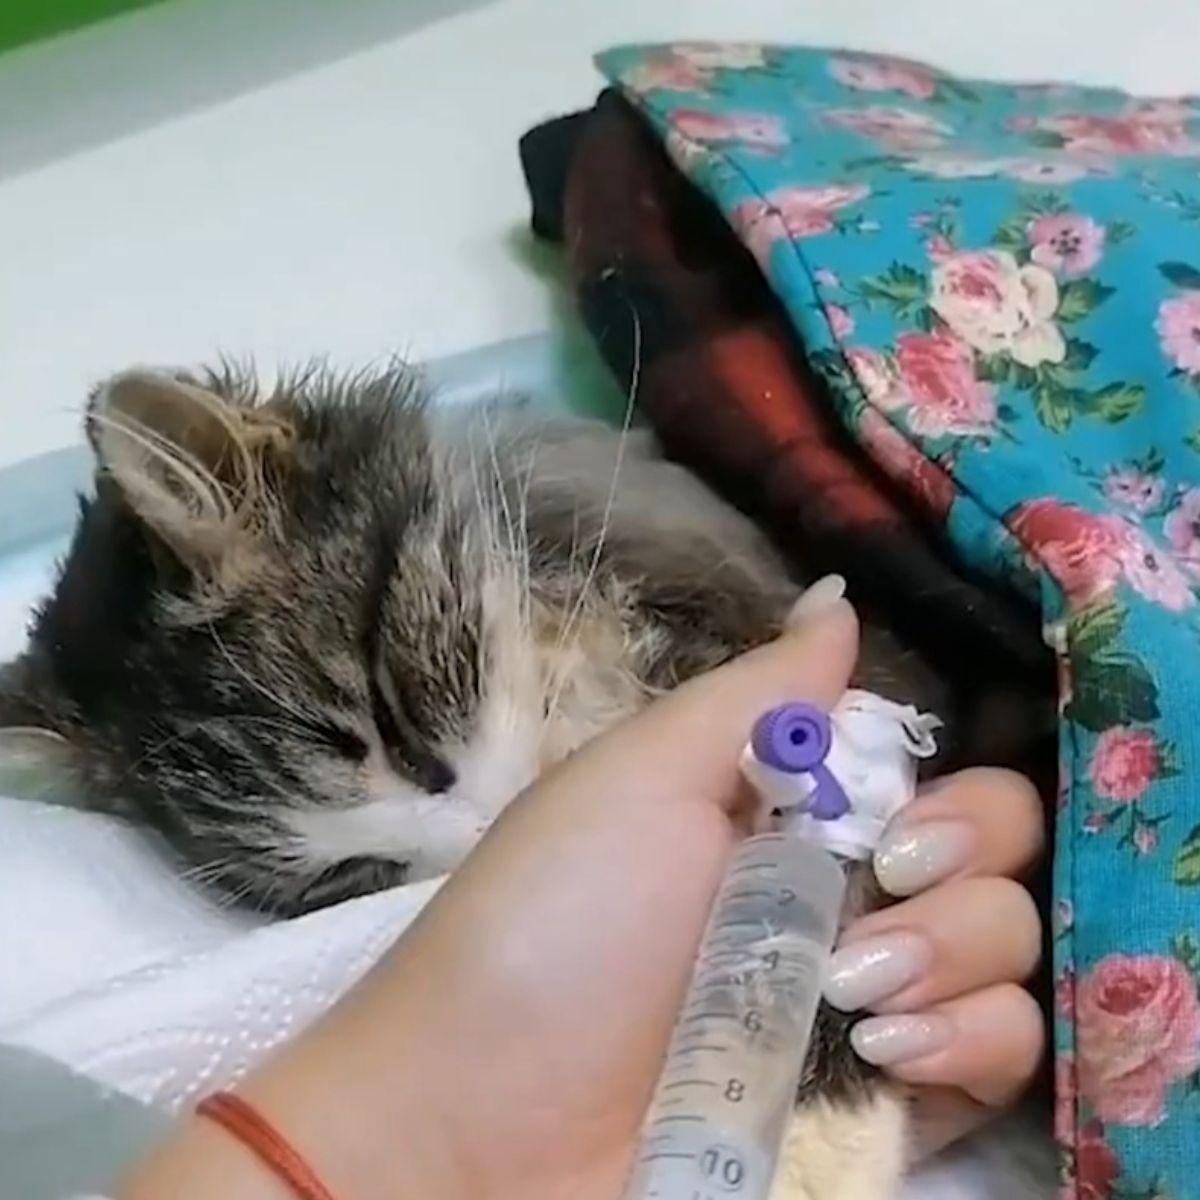 woman helping sick cat